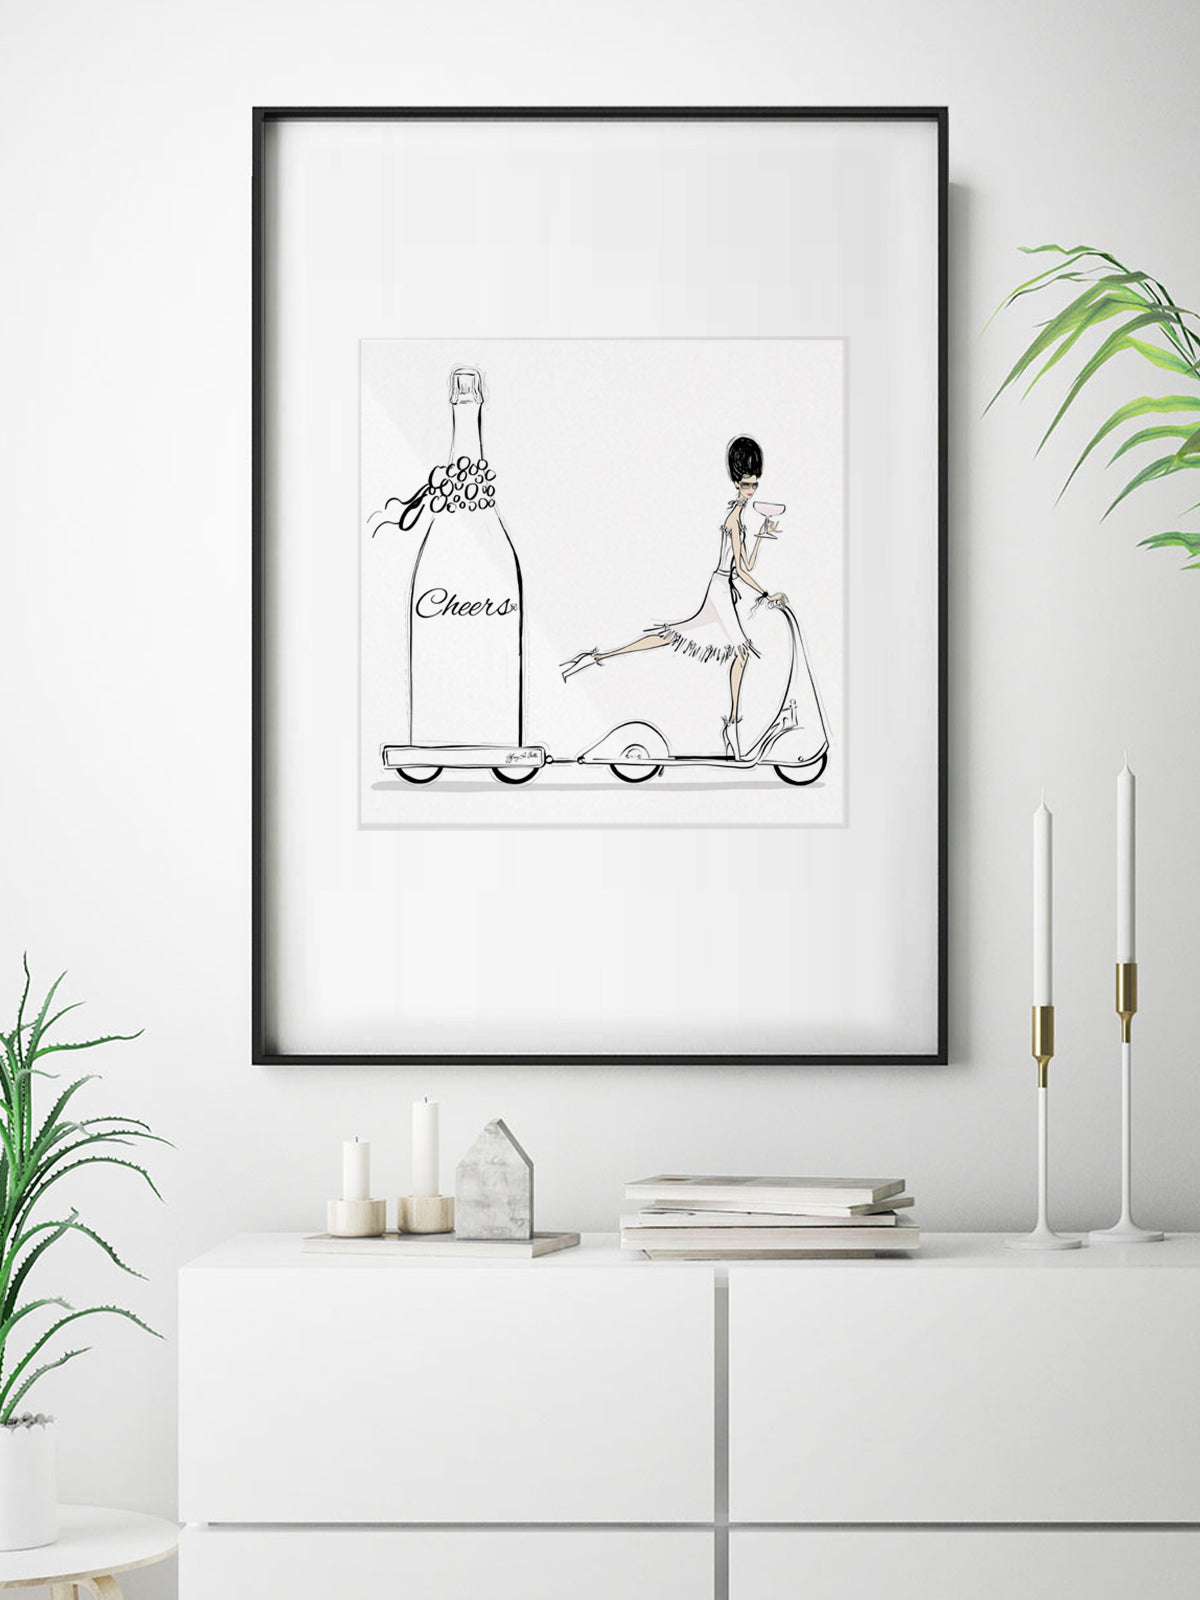 Cheers on Wheels - Illustration - Limited Edition Print - Tiffany La Belle